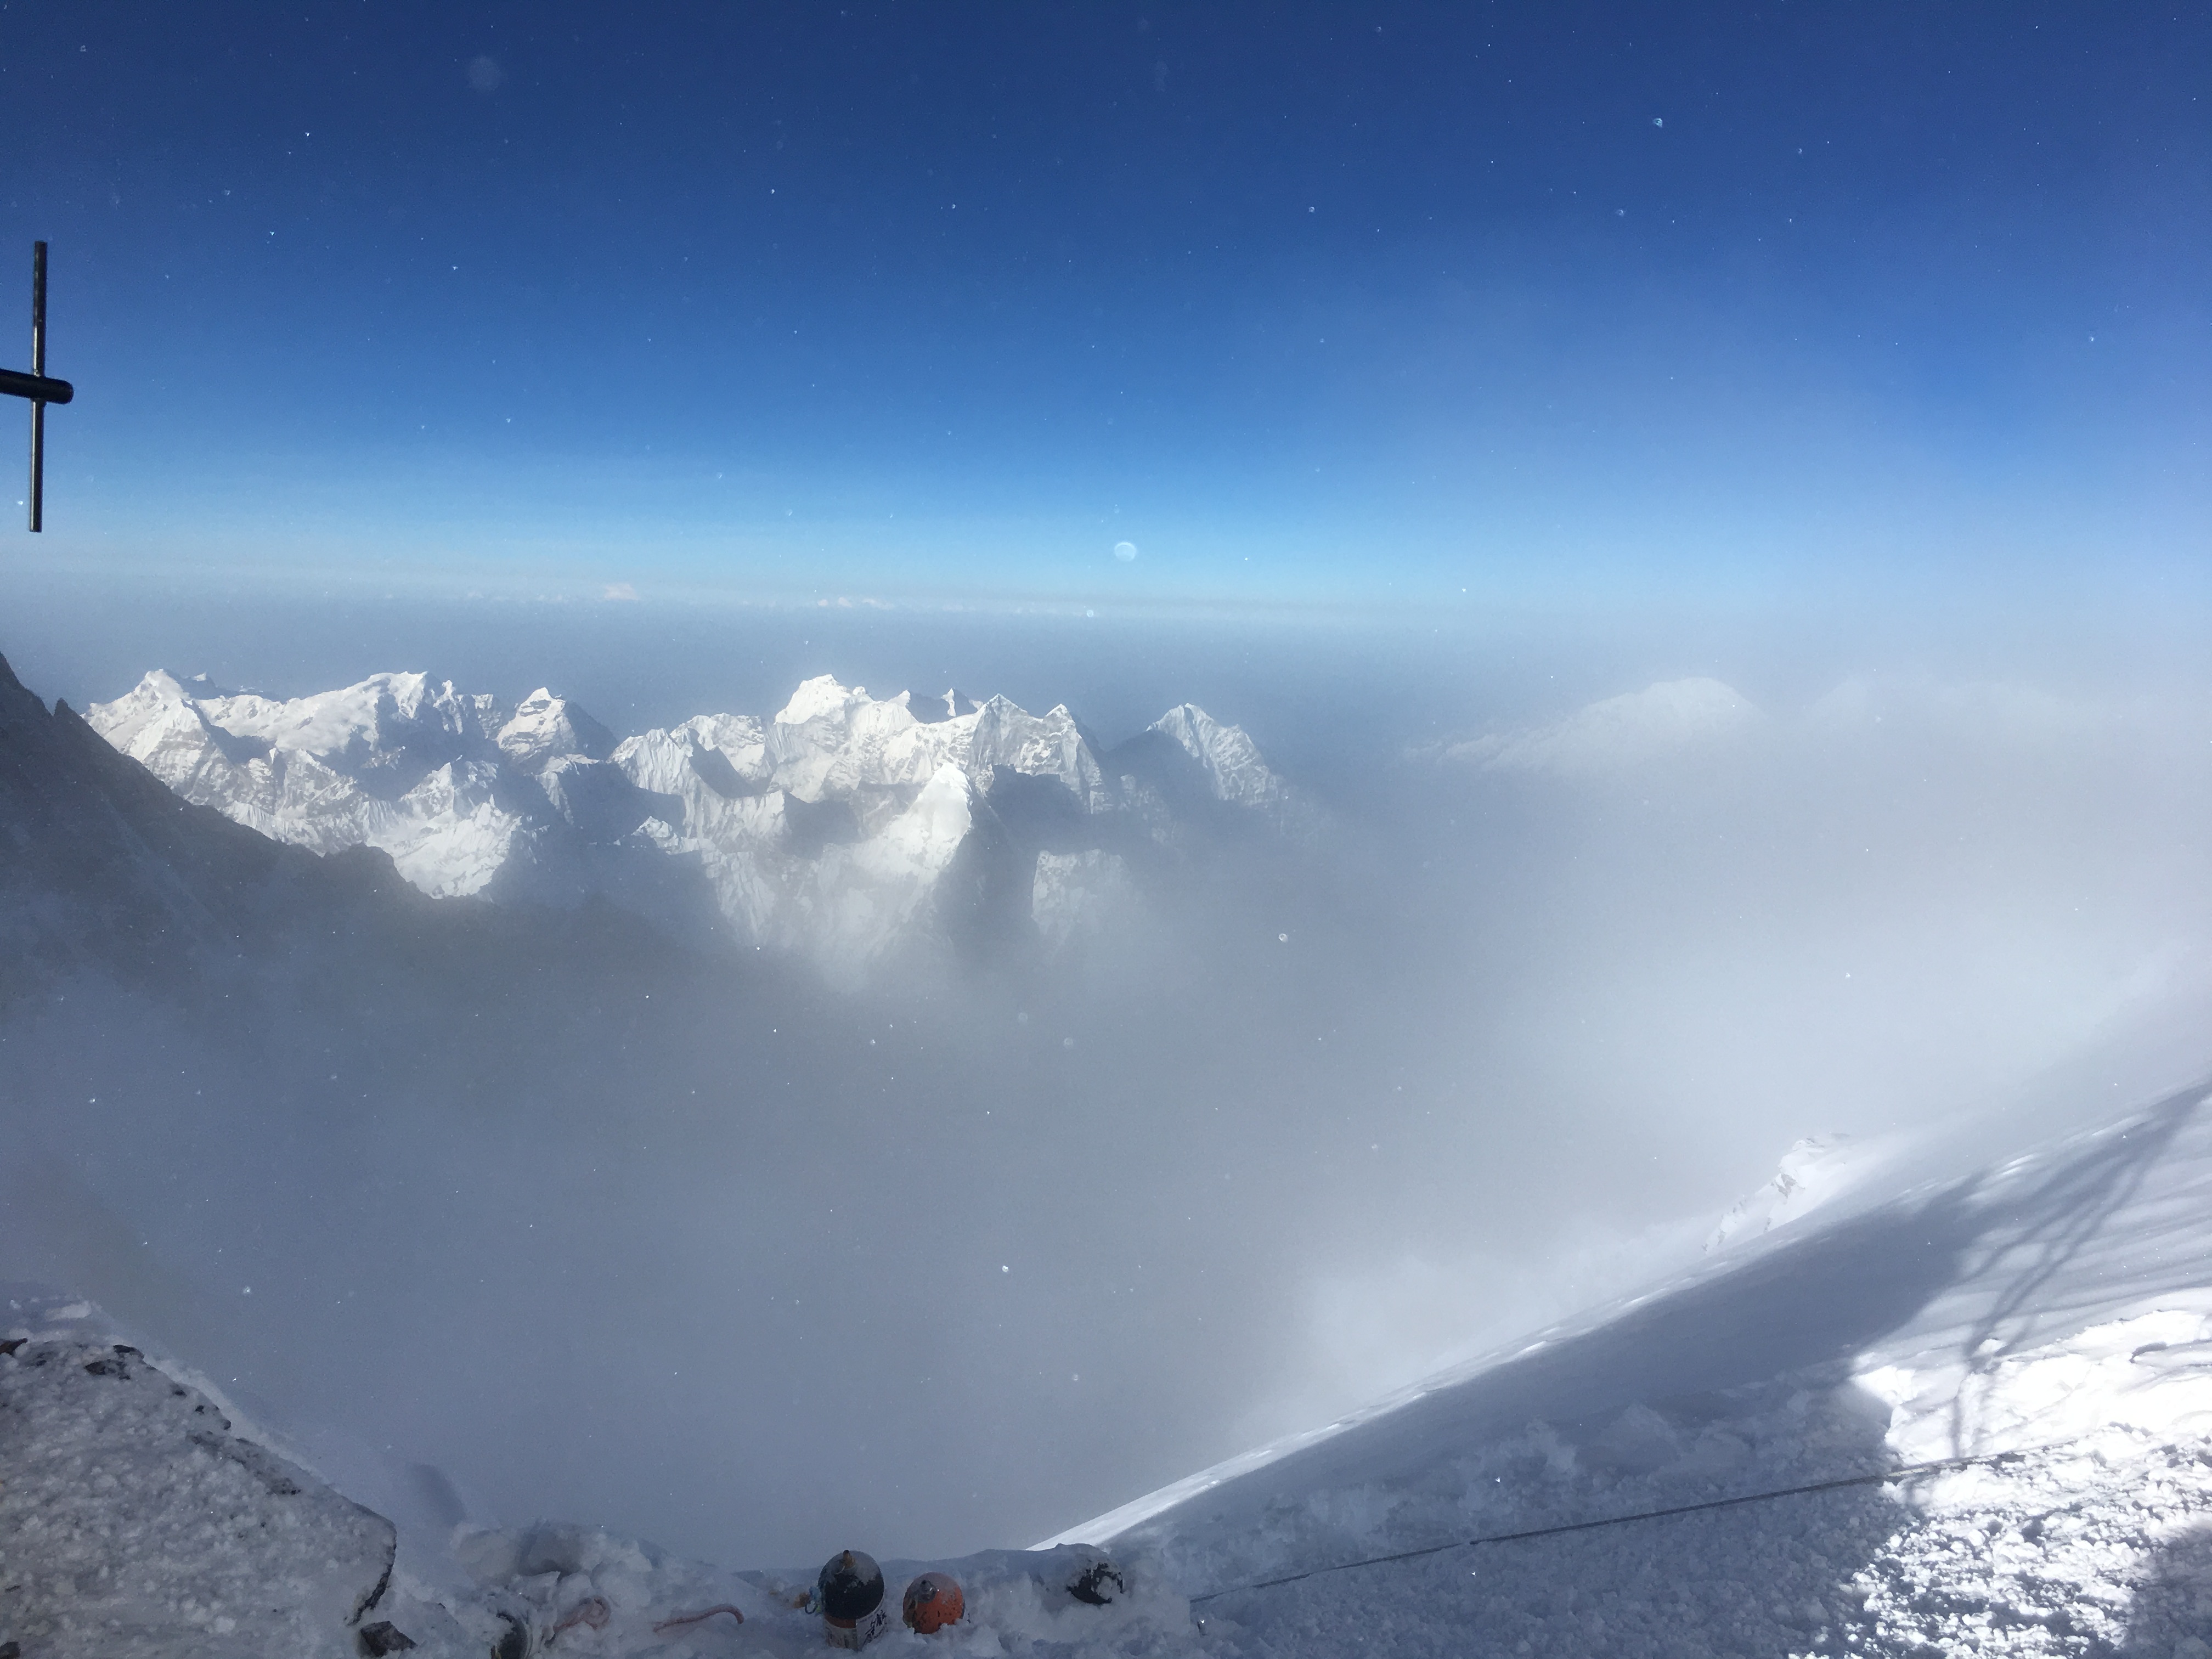 Everest 8,848m (South)